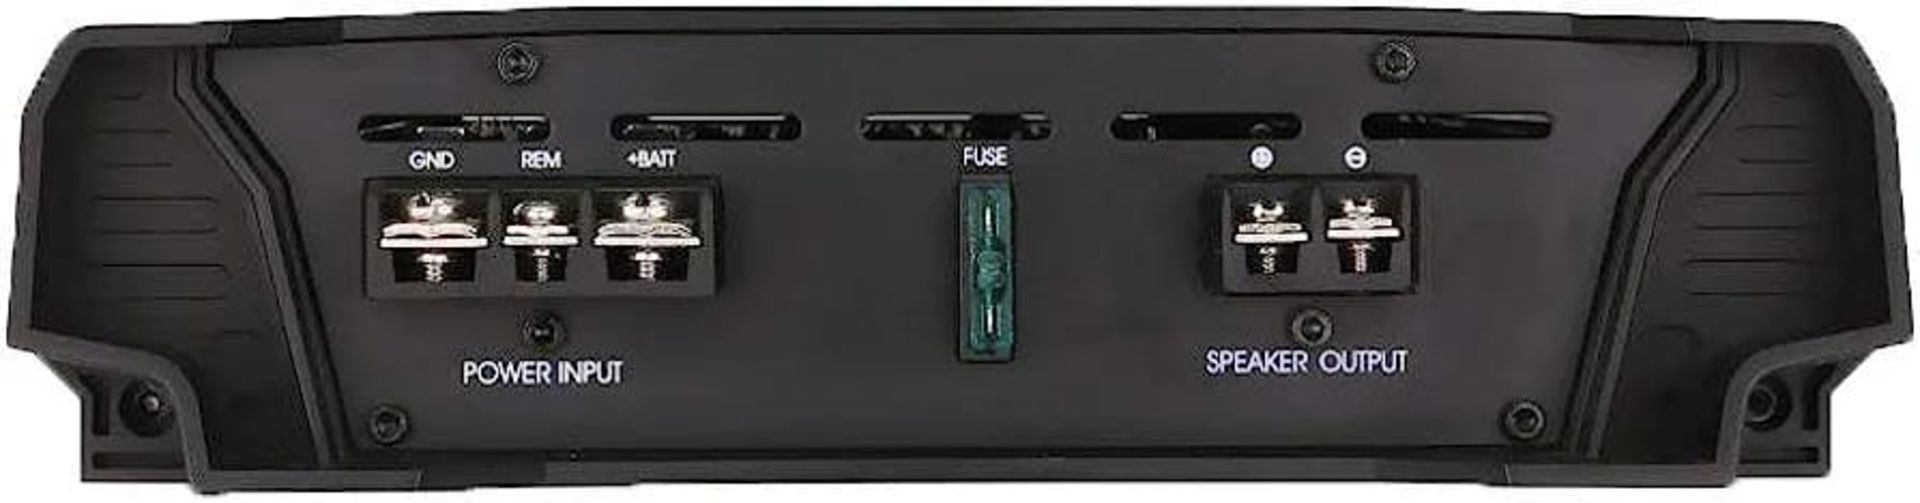 3 NEW BOXES X LANZAR HERITAGE SERIES HTG137 2000 WATT MAX POWER AUDIO AMPLIFIERS - Image 2 of 3